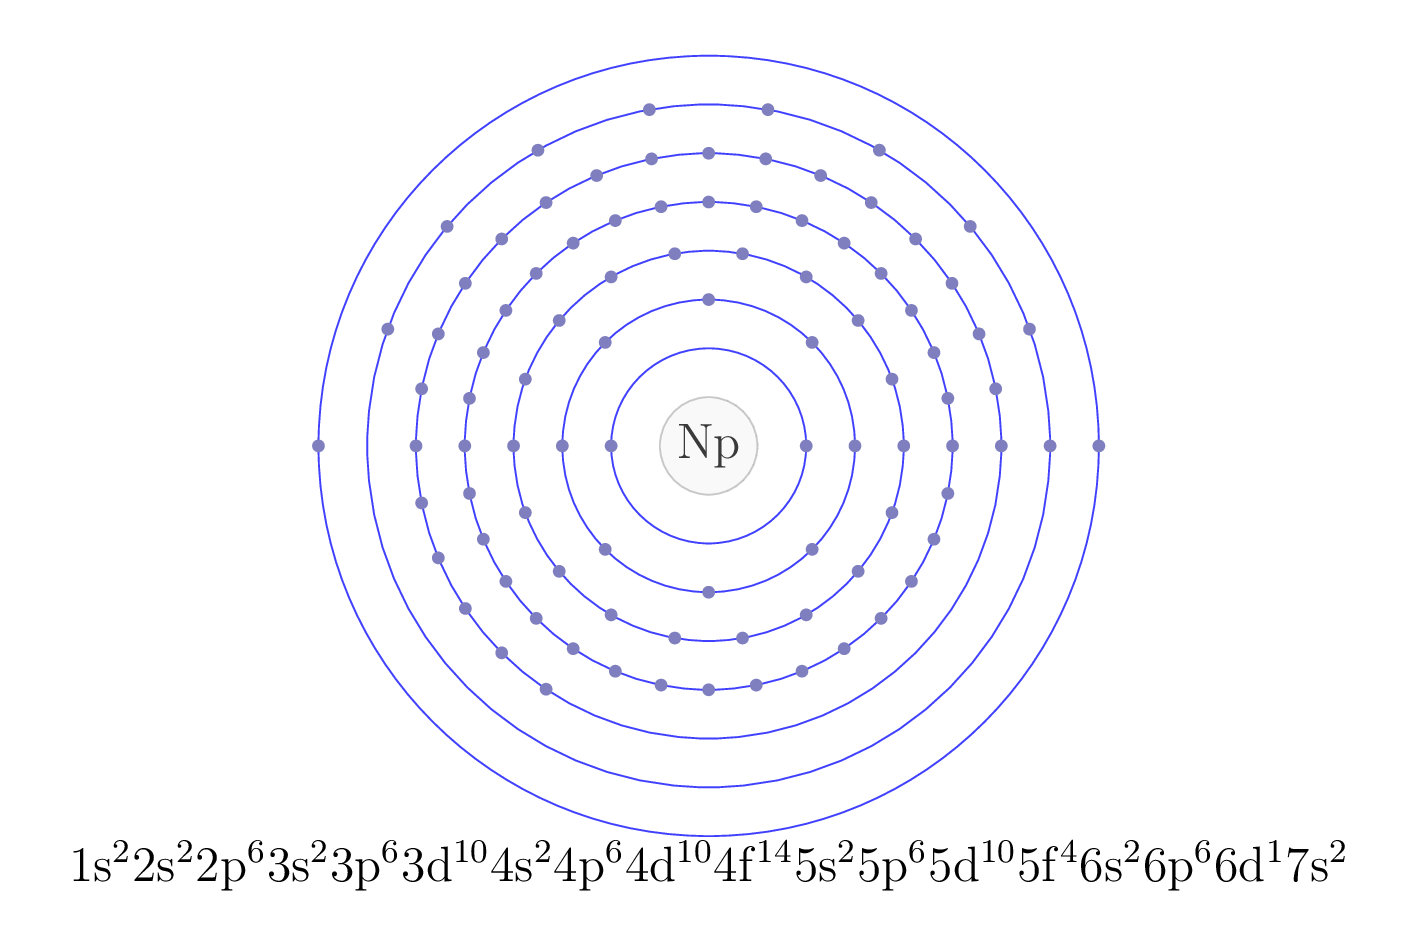 electron configuration of element Np